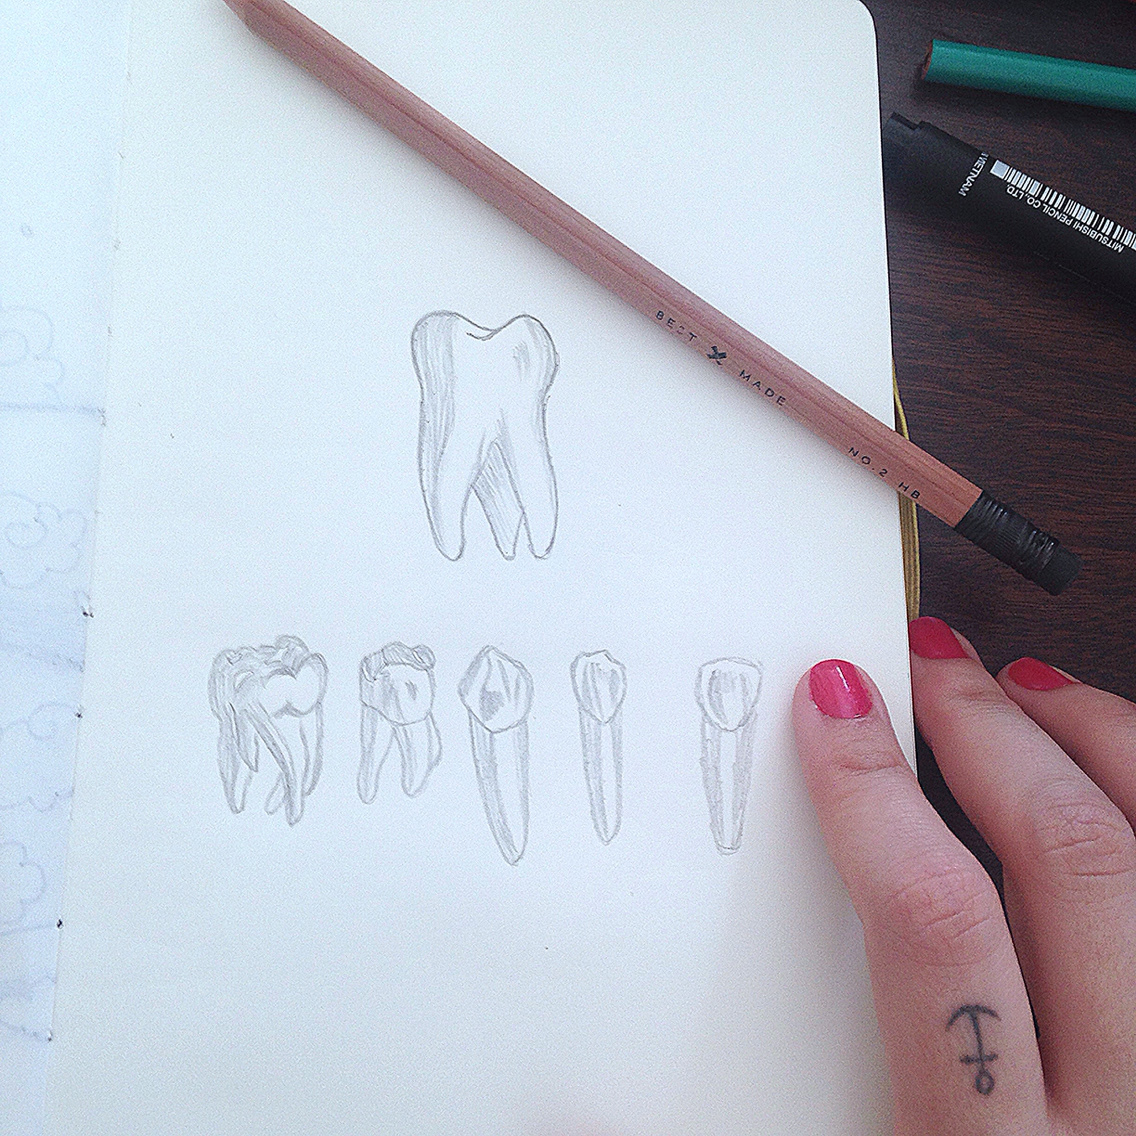 dente Dentes tooth tooths toothtattoo tatoo Skething sketh draw sketchbook moleskine moleskineatria design